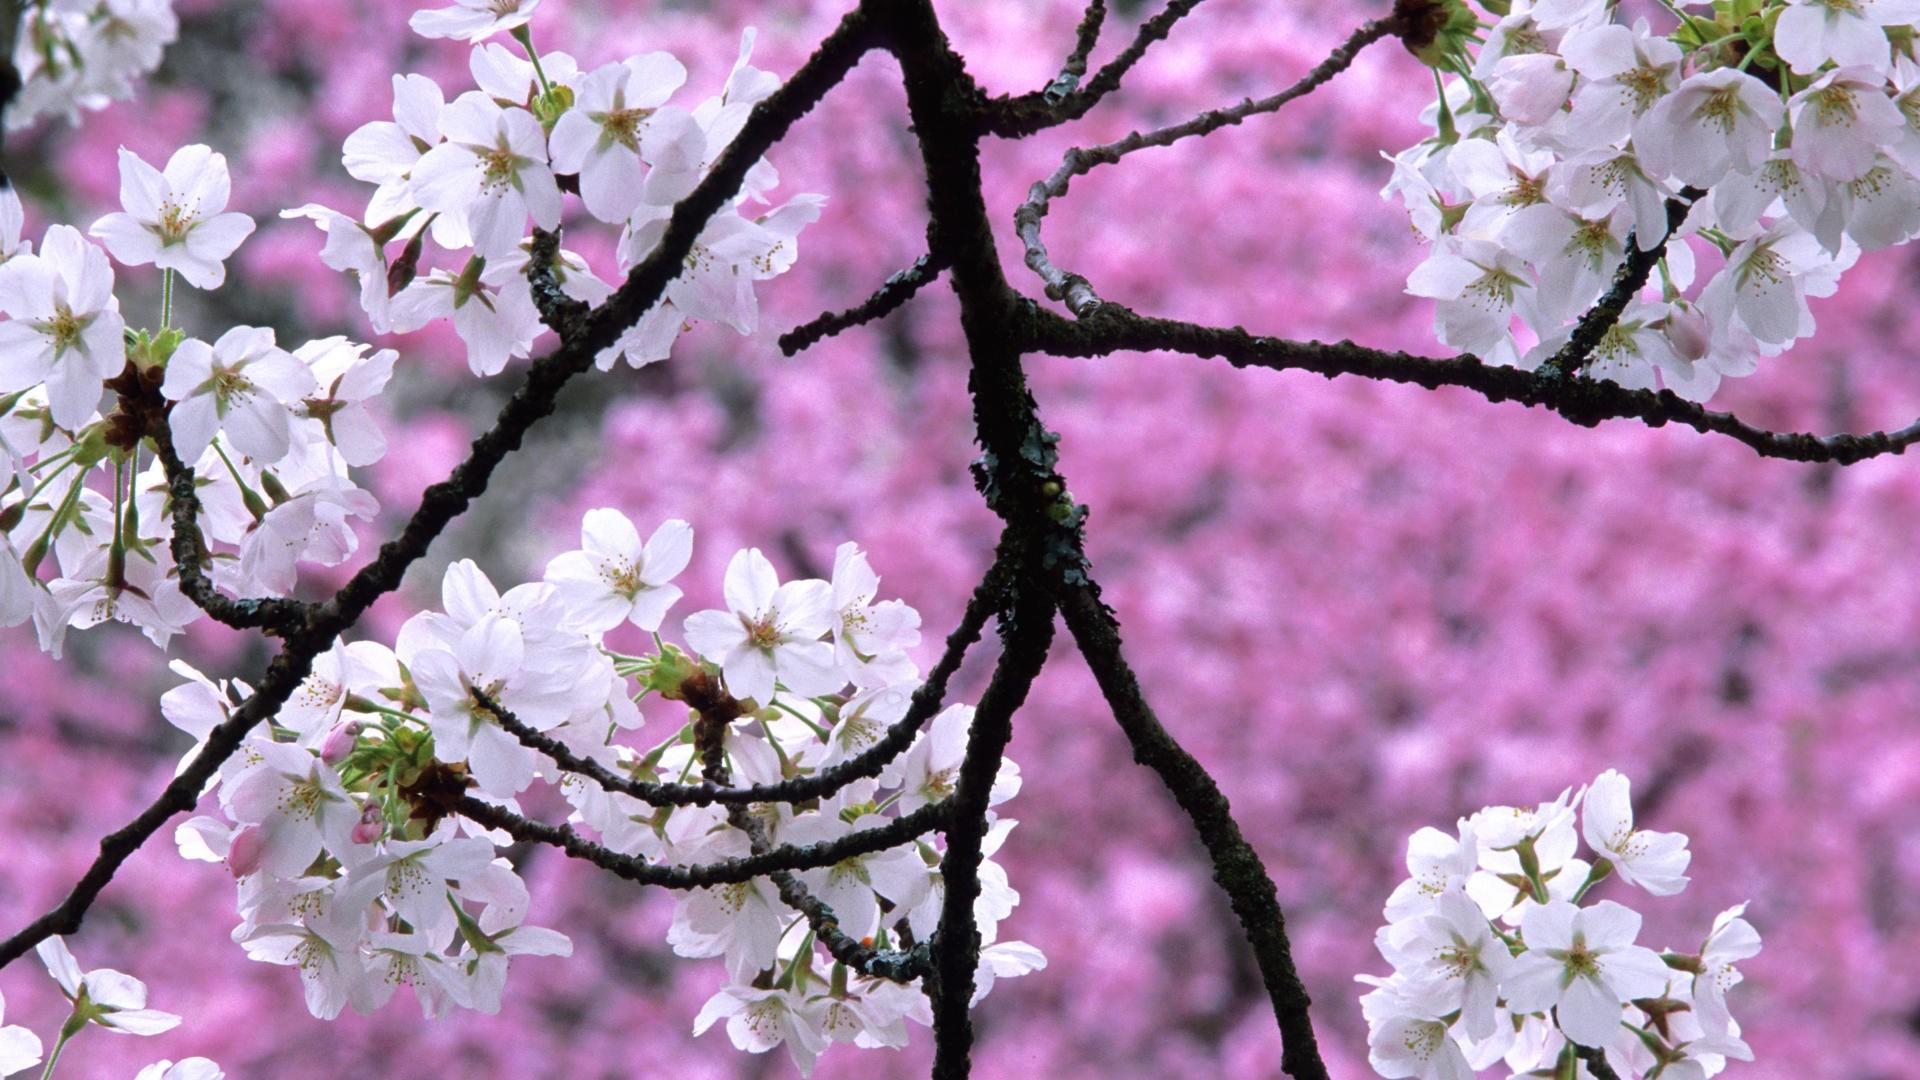 Nature cherry blossoms trees spring (season) wallpaper | (62582)